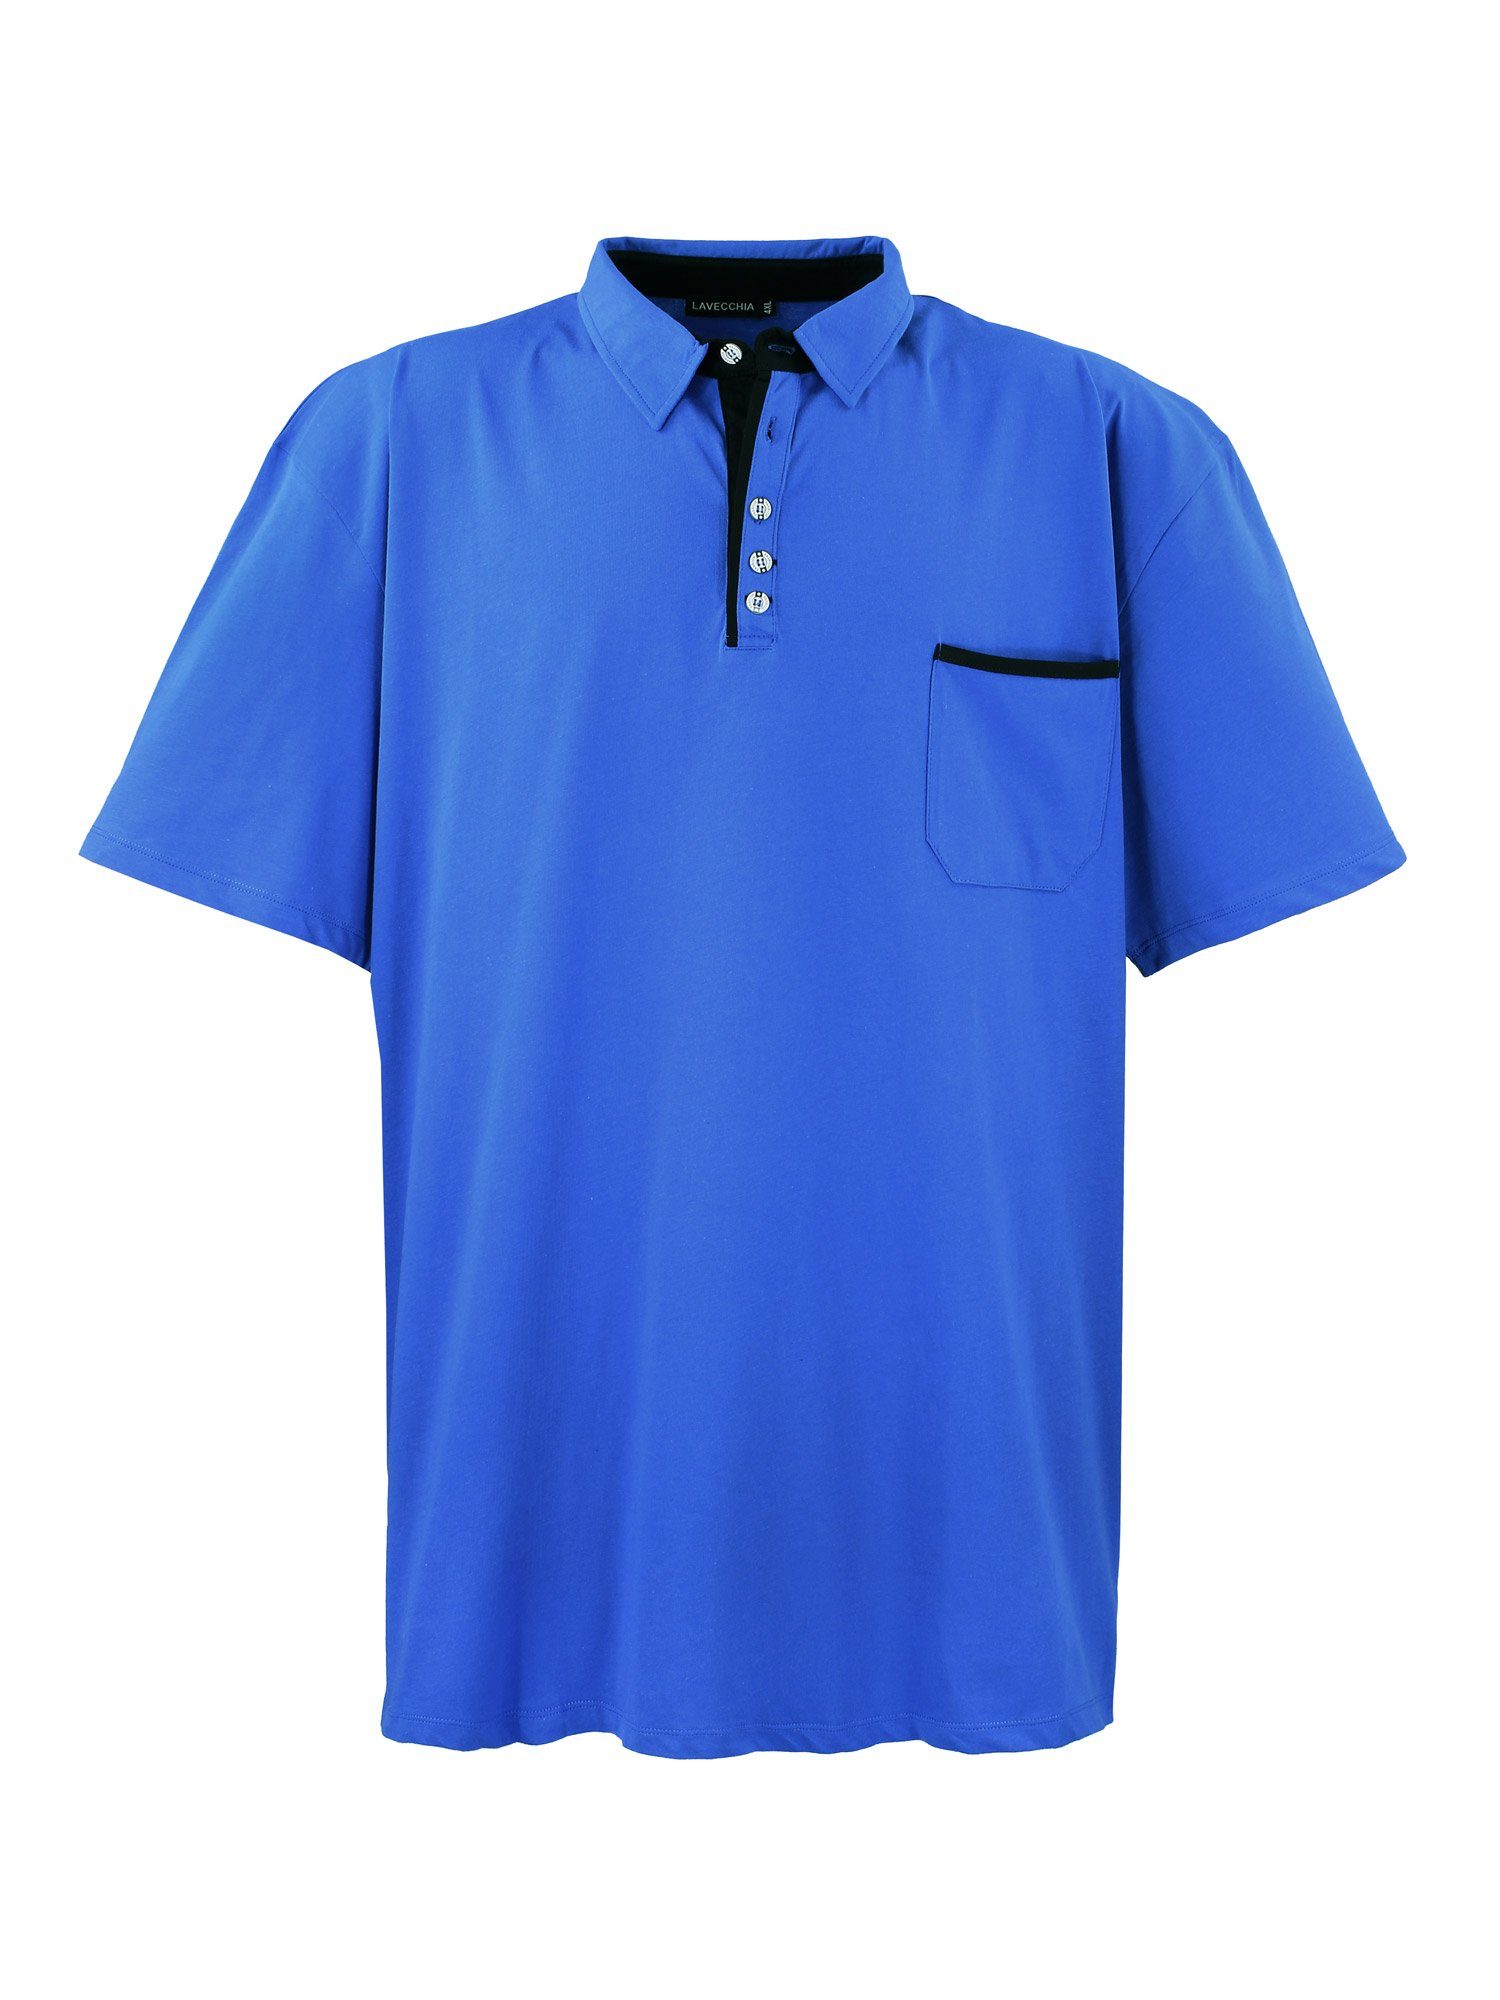 Lavecchia Poloshirt Übergrößen Herren Polo Shirt LV-1701 Herren Polo Shirt royalblau